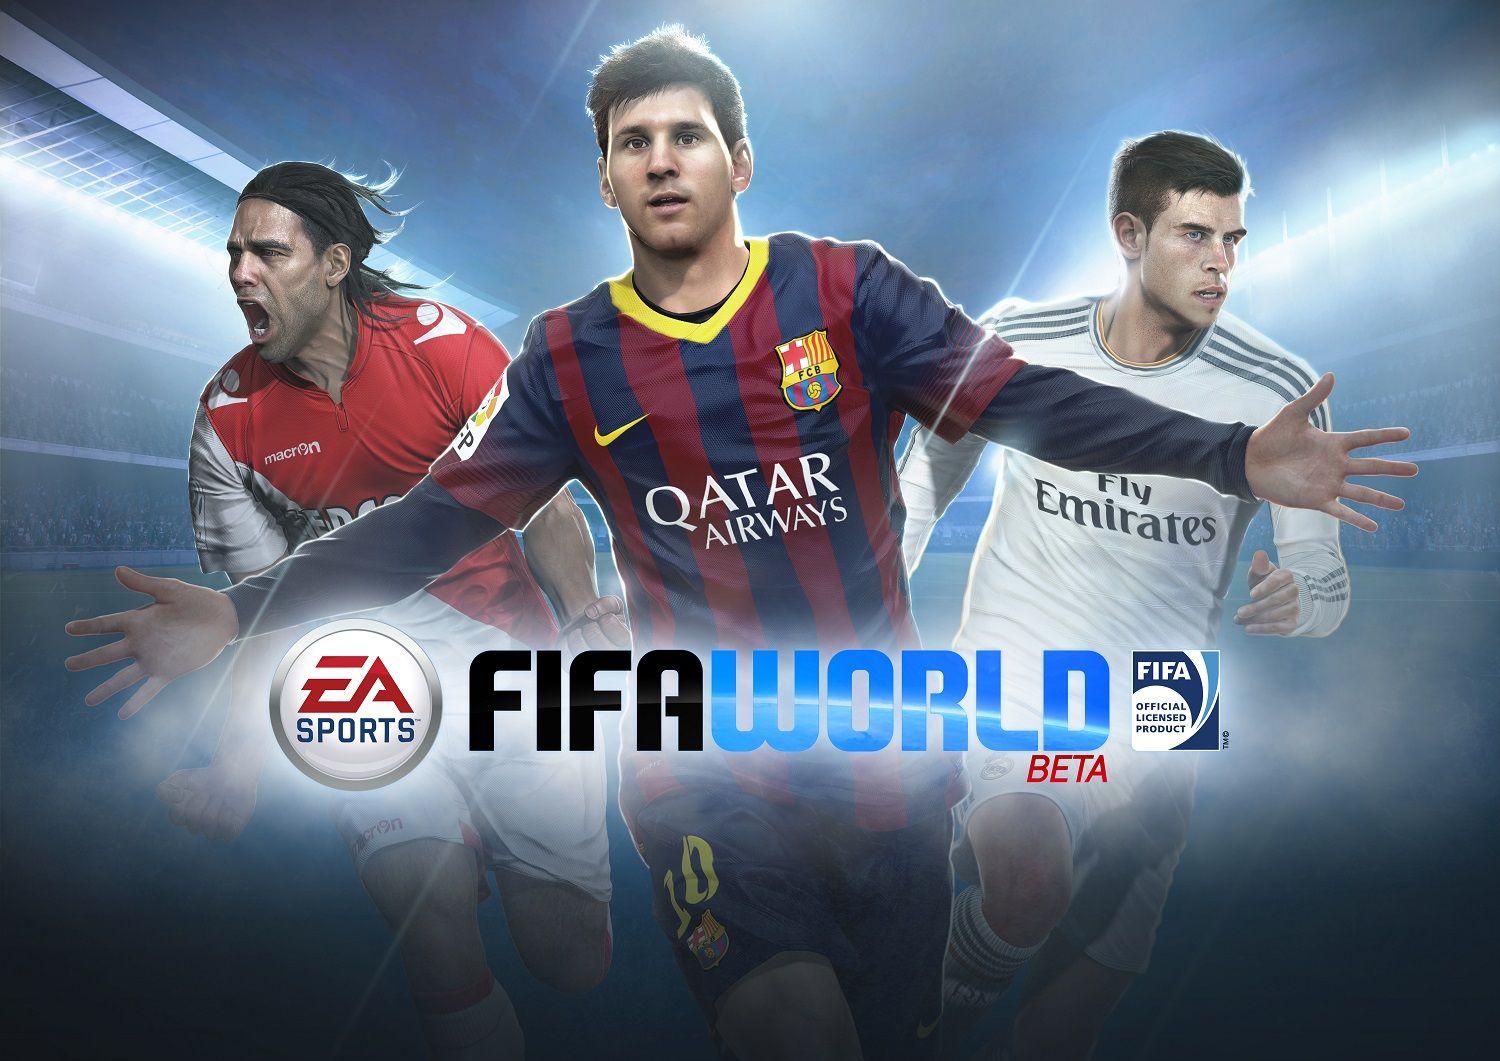 Free To Play PC Game EA Sports FIFA World Kicks Off Global Open Beta